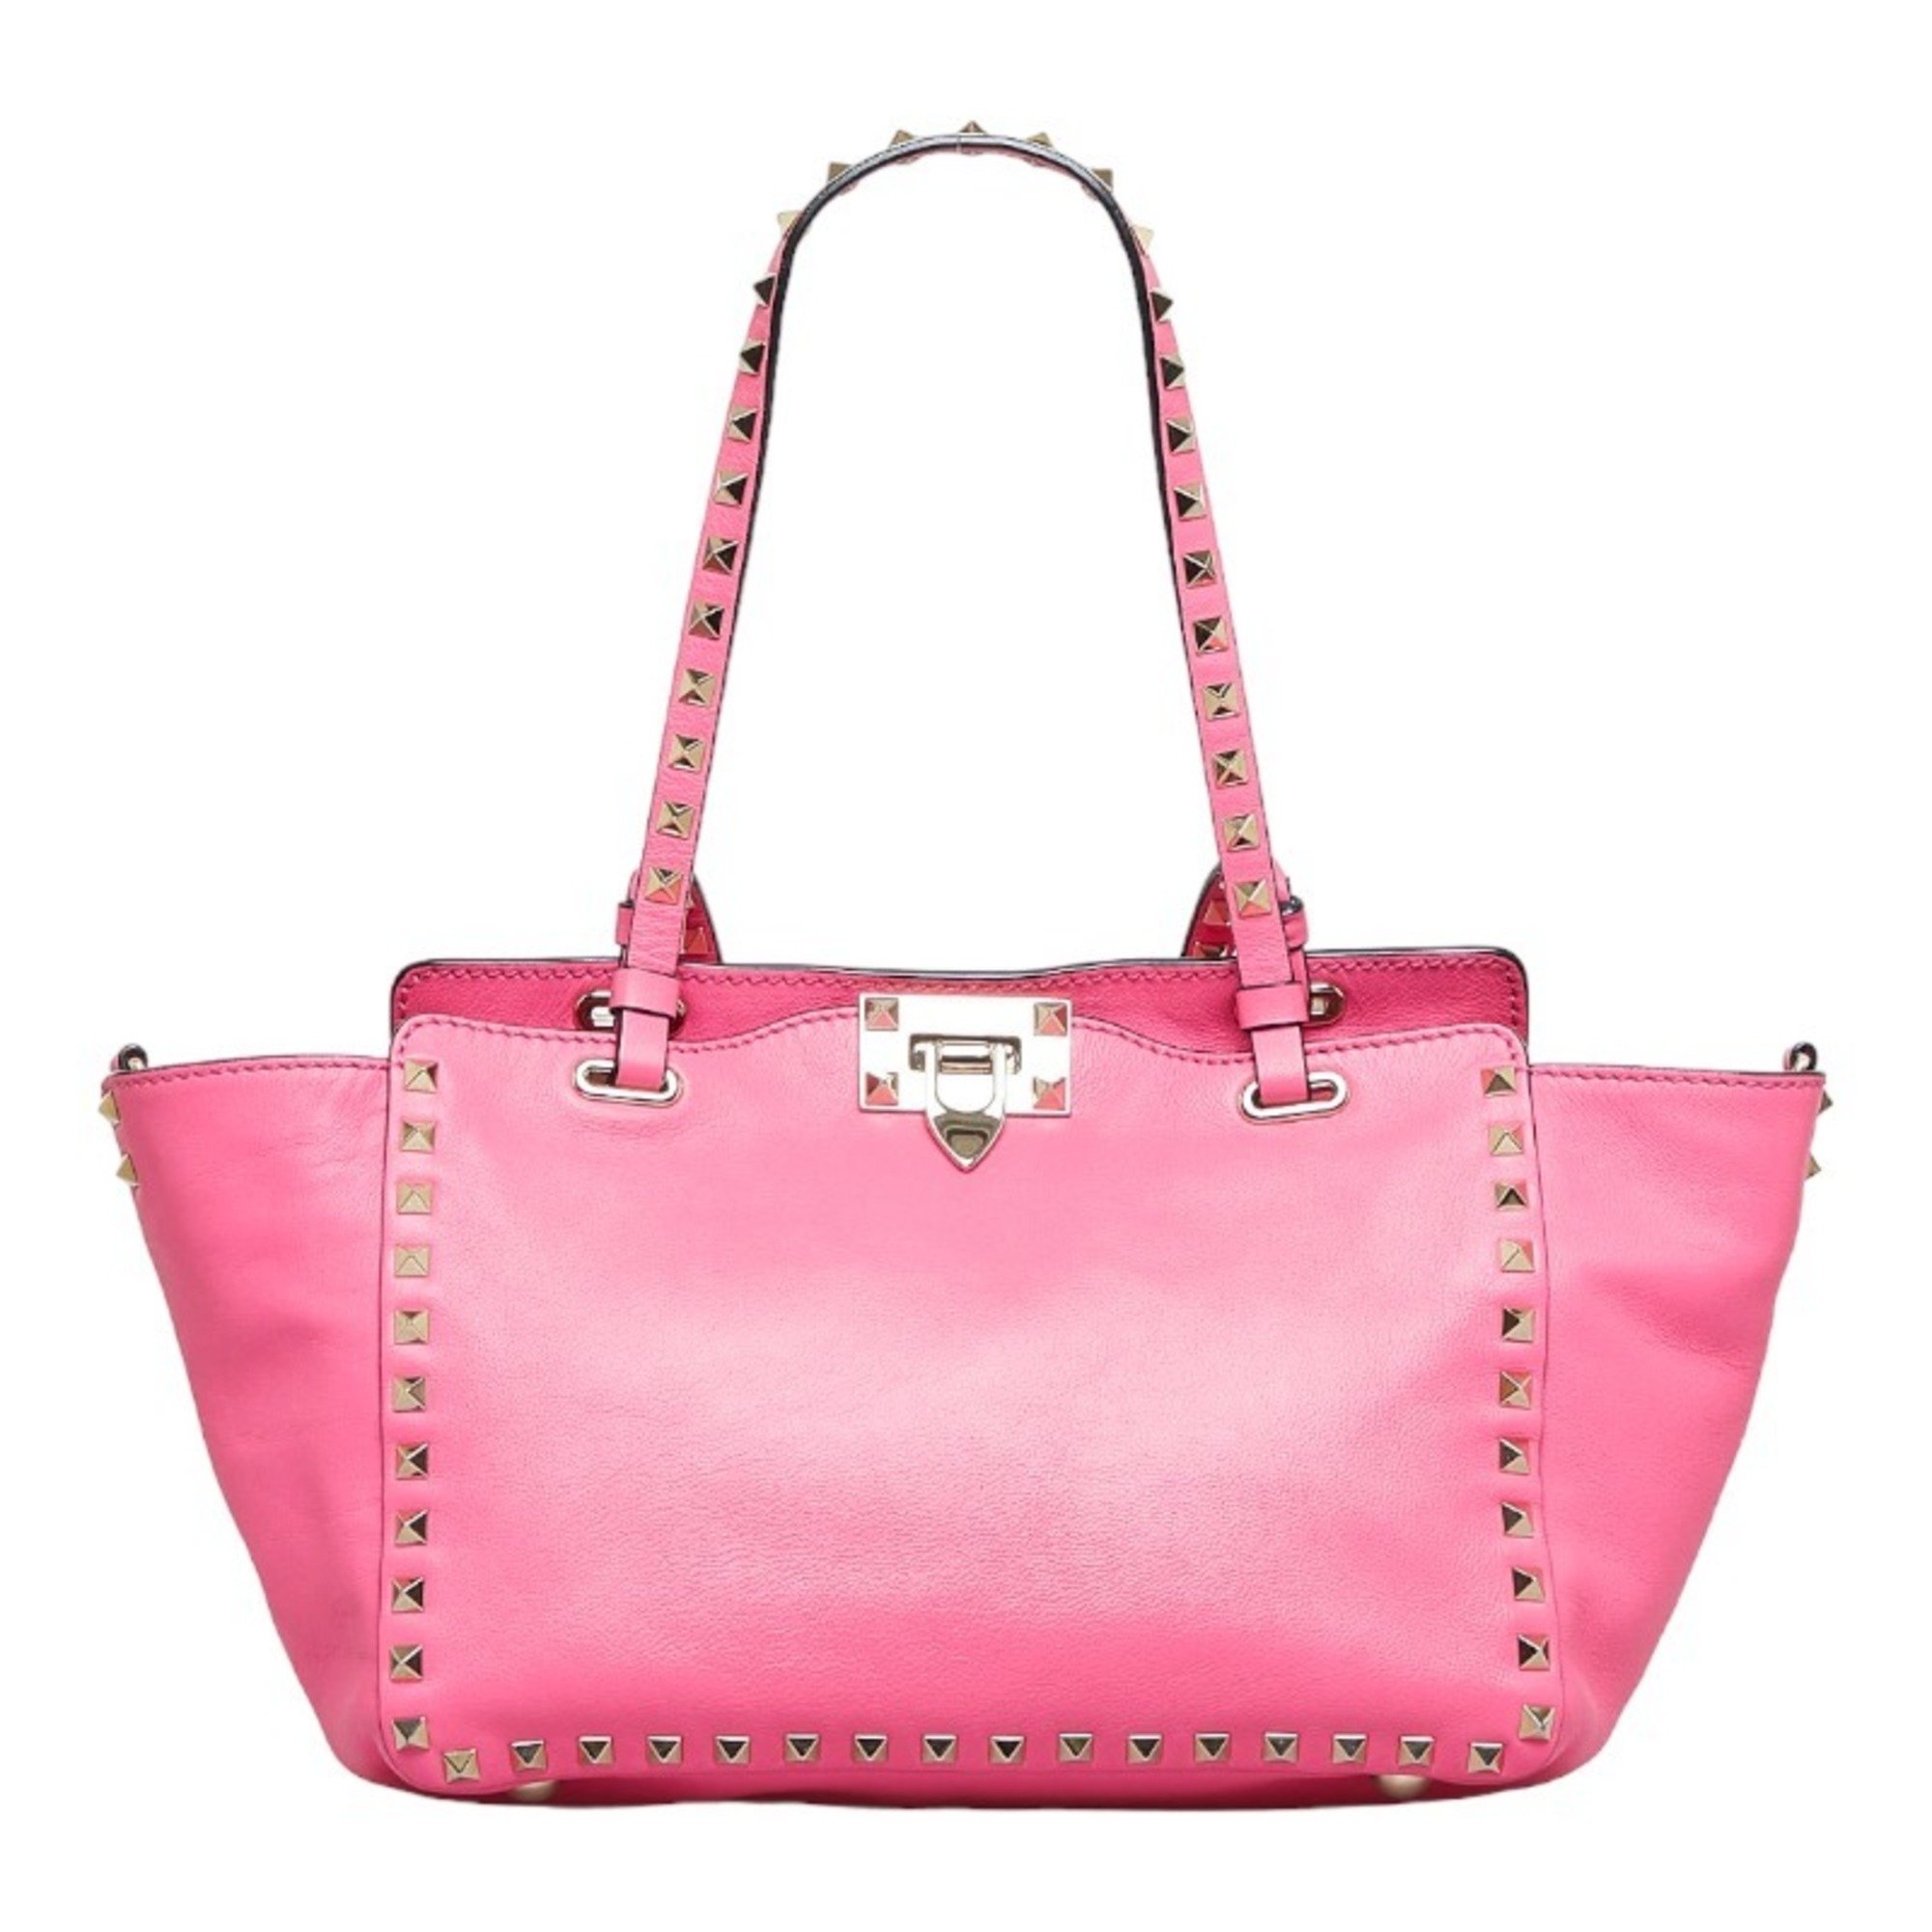 Valentino Rockstud handbag shoulder bag pink leather ladies VALENTINO